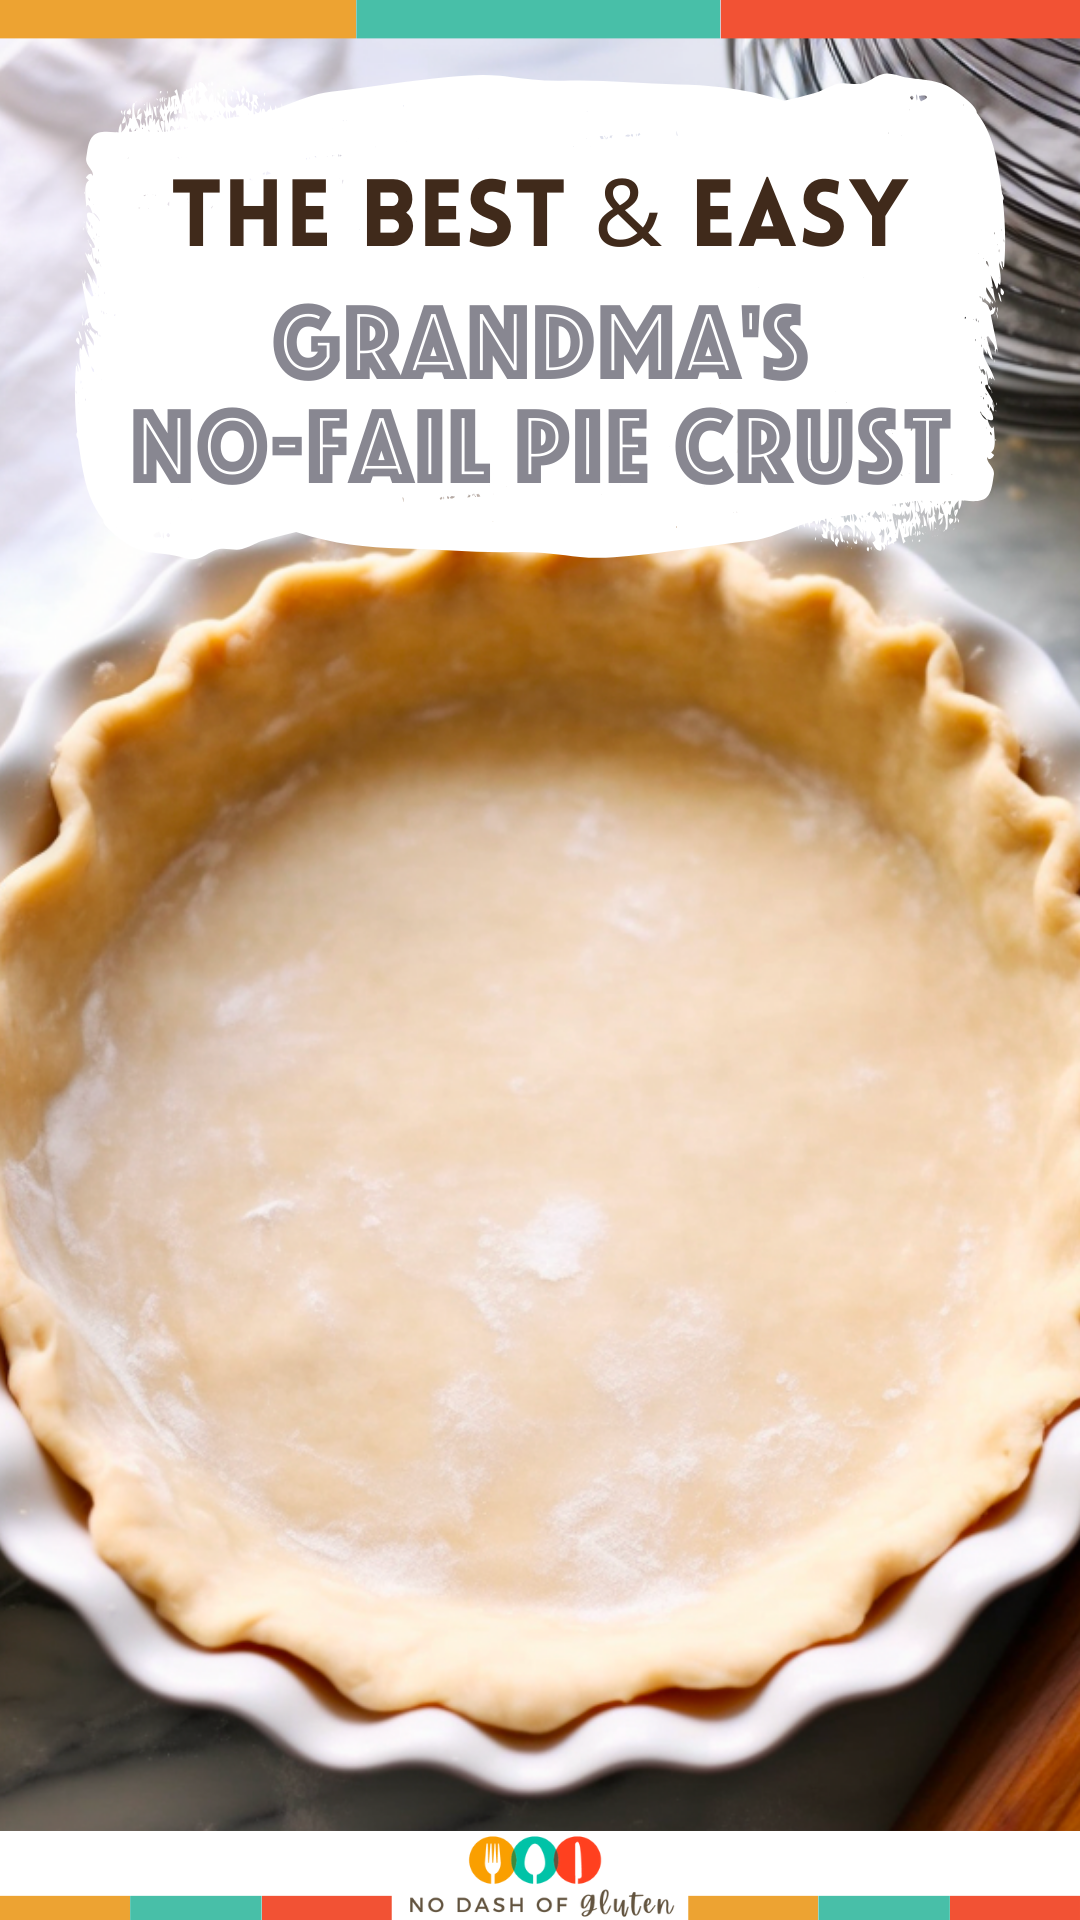 Grandma's No-Fail Pie Crust